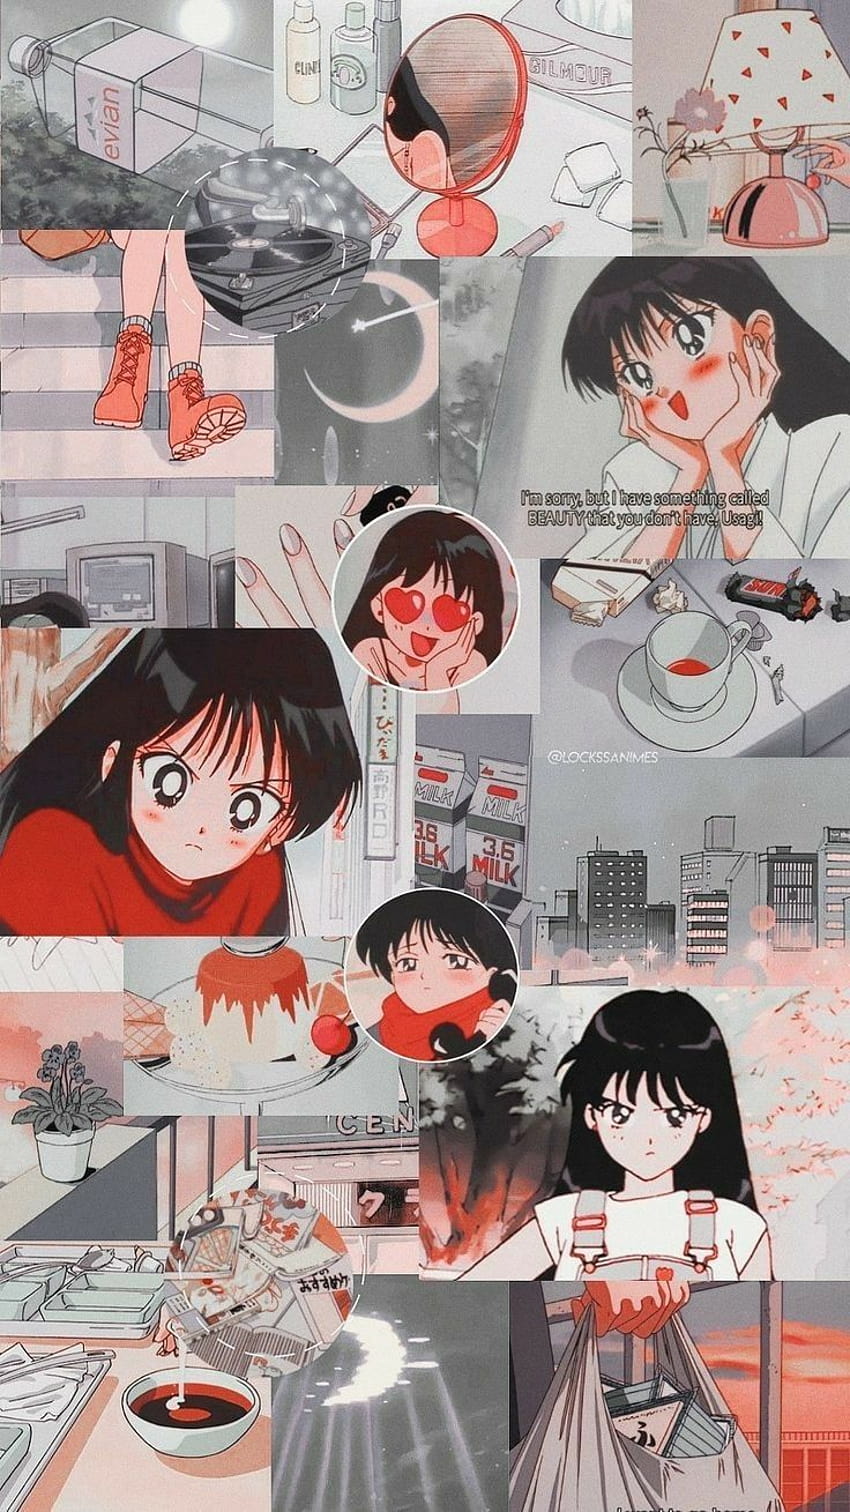 List of Good Looking Retro Anime IPhone Wallpapper, retro anime smartphone HD phone wallpaper